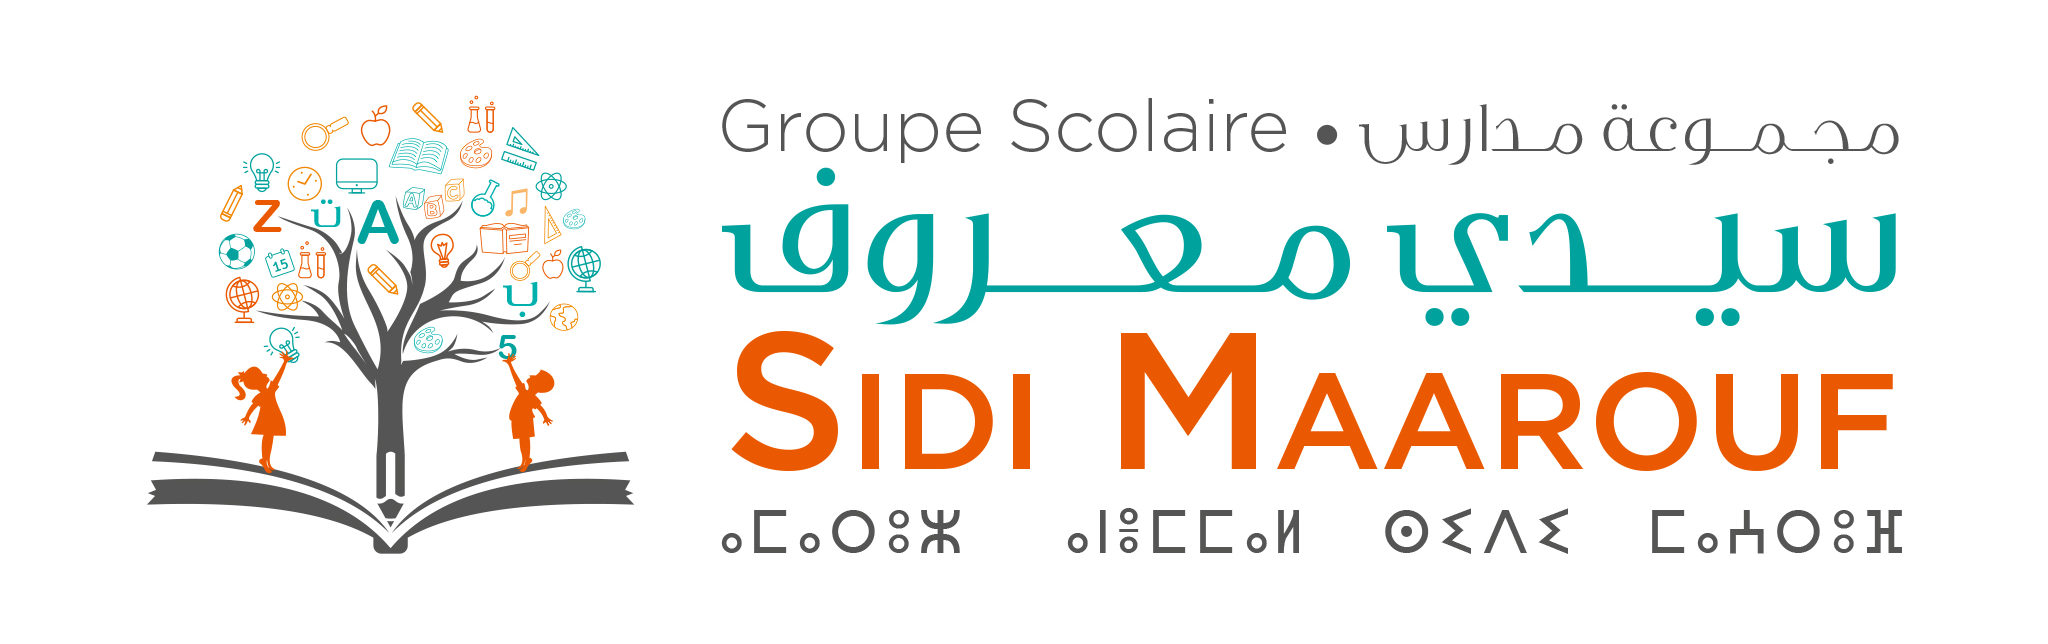 Groupe Scolaire Sidi Maârouf